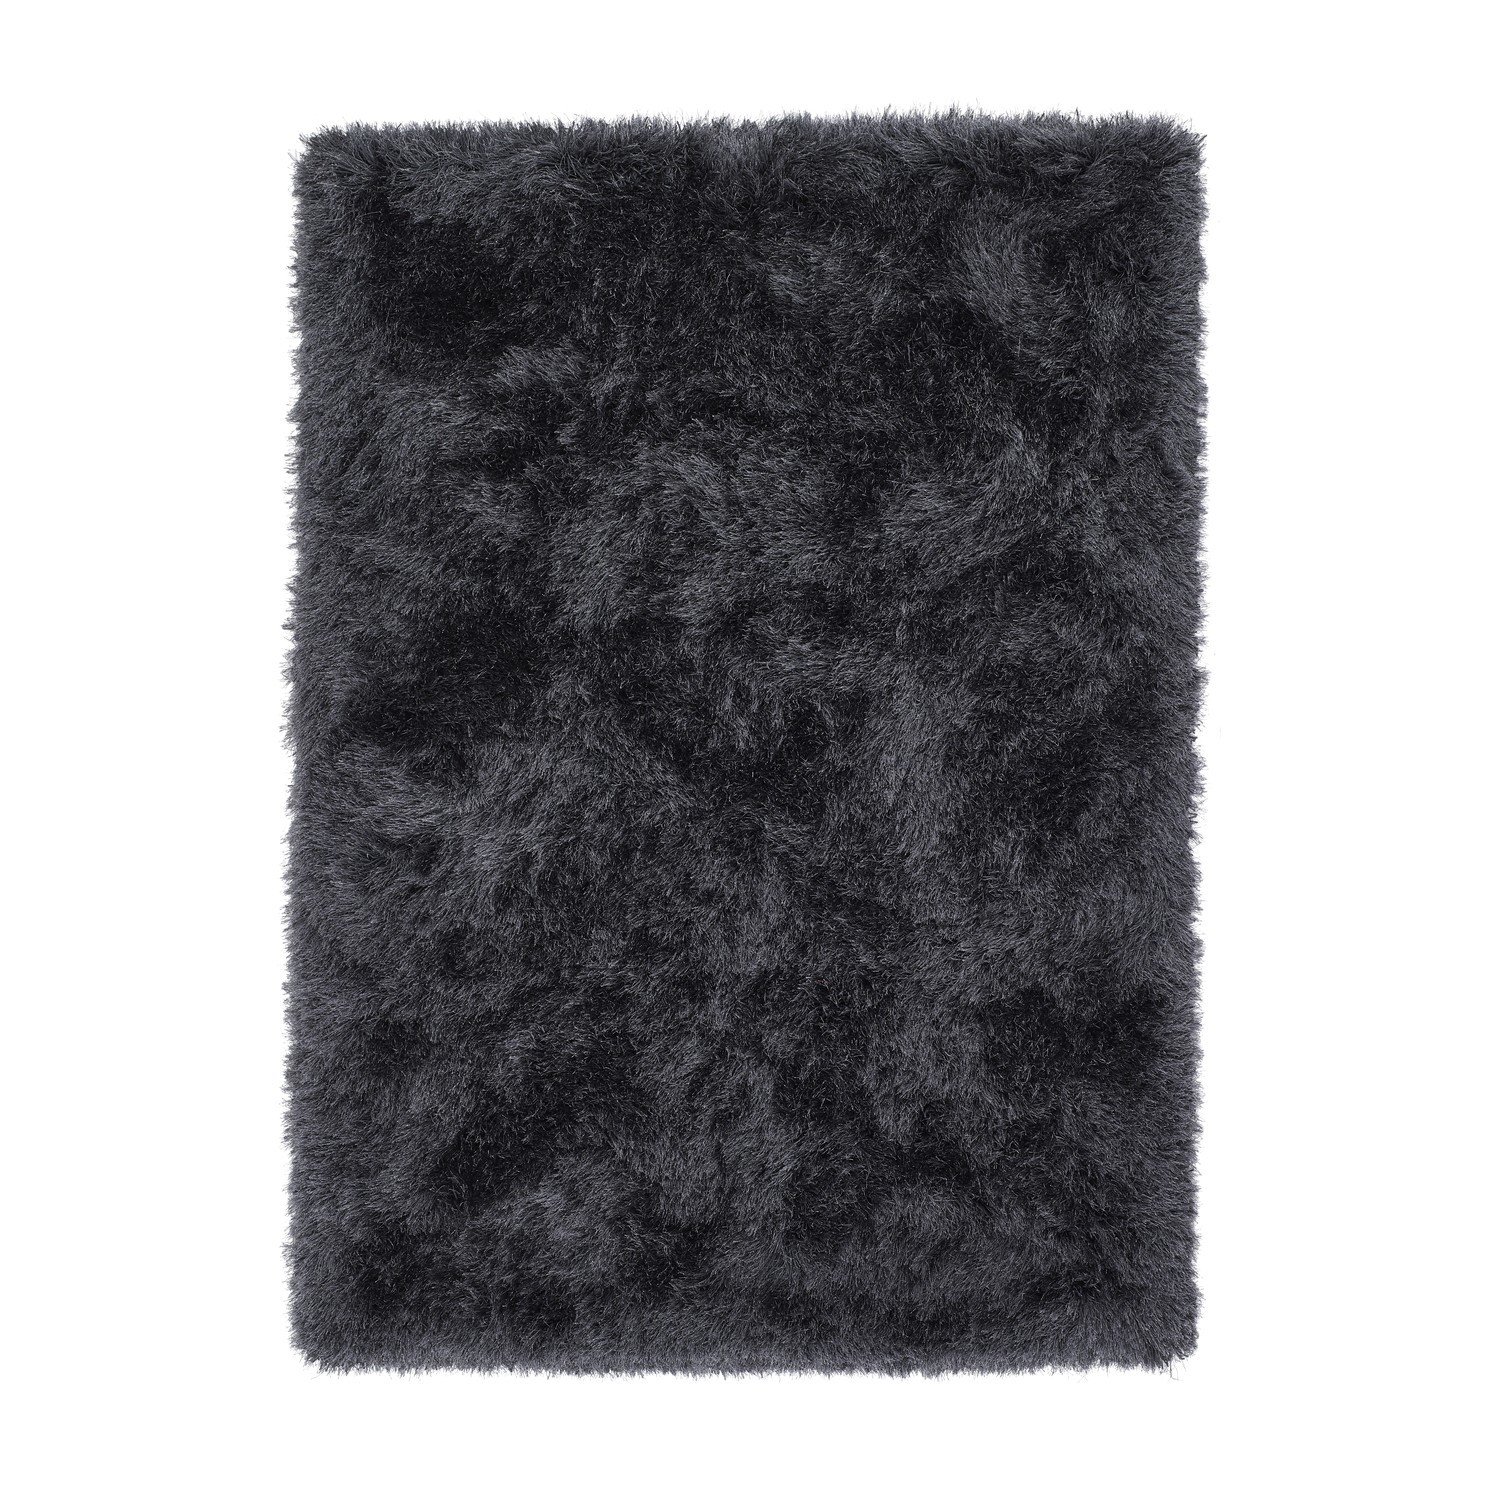 Photo of Ripley extravagance shaggy charcoal grey rug - 230x160cm